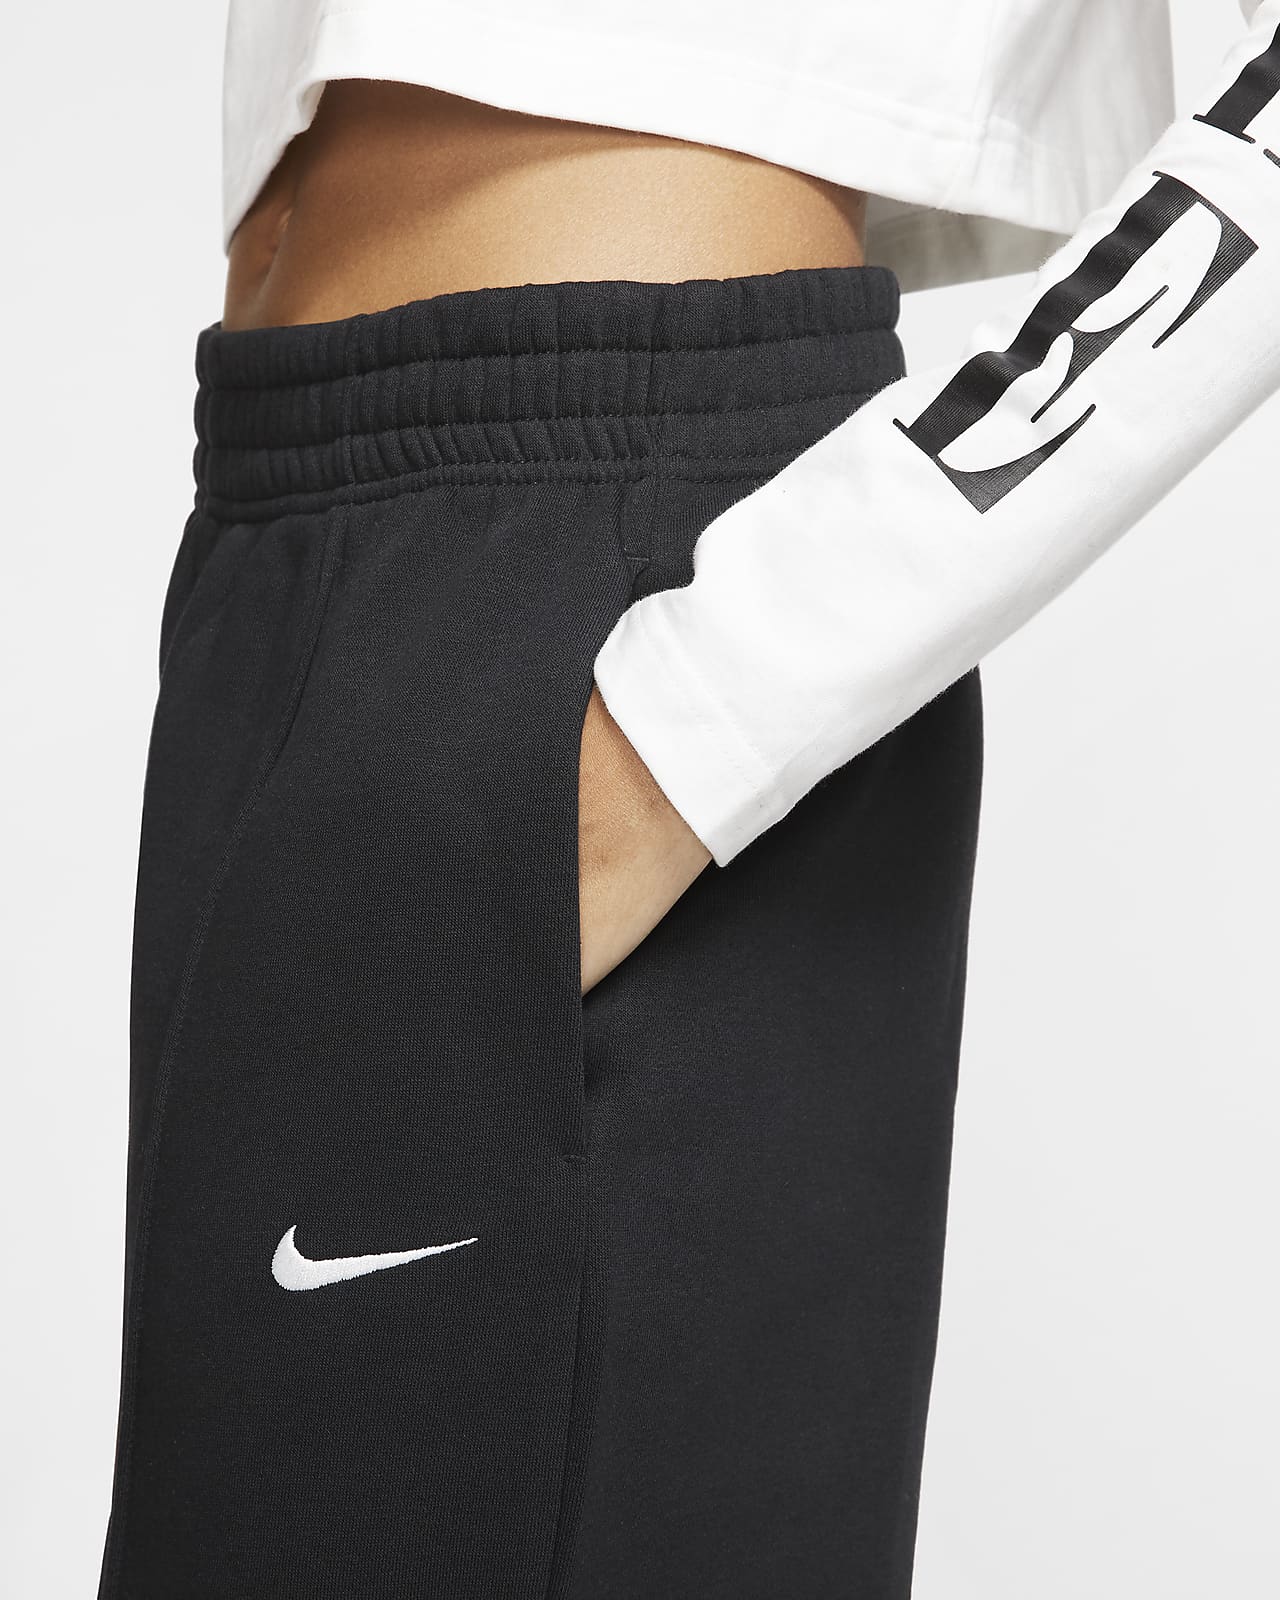 Los mejores pants de tejido Fleece Nike para mujer. Nike MX